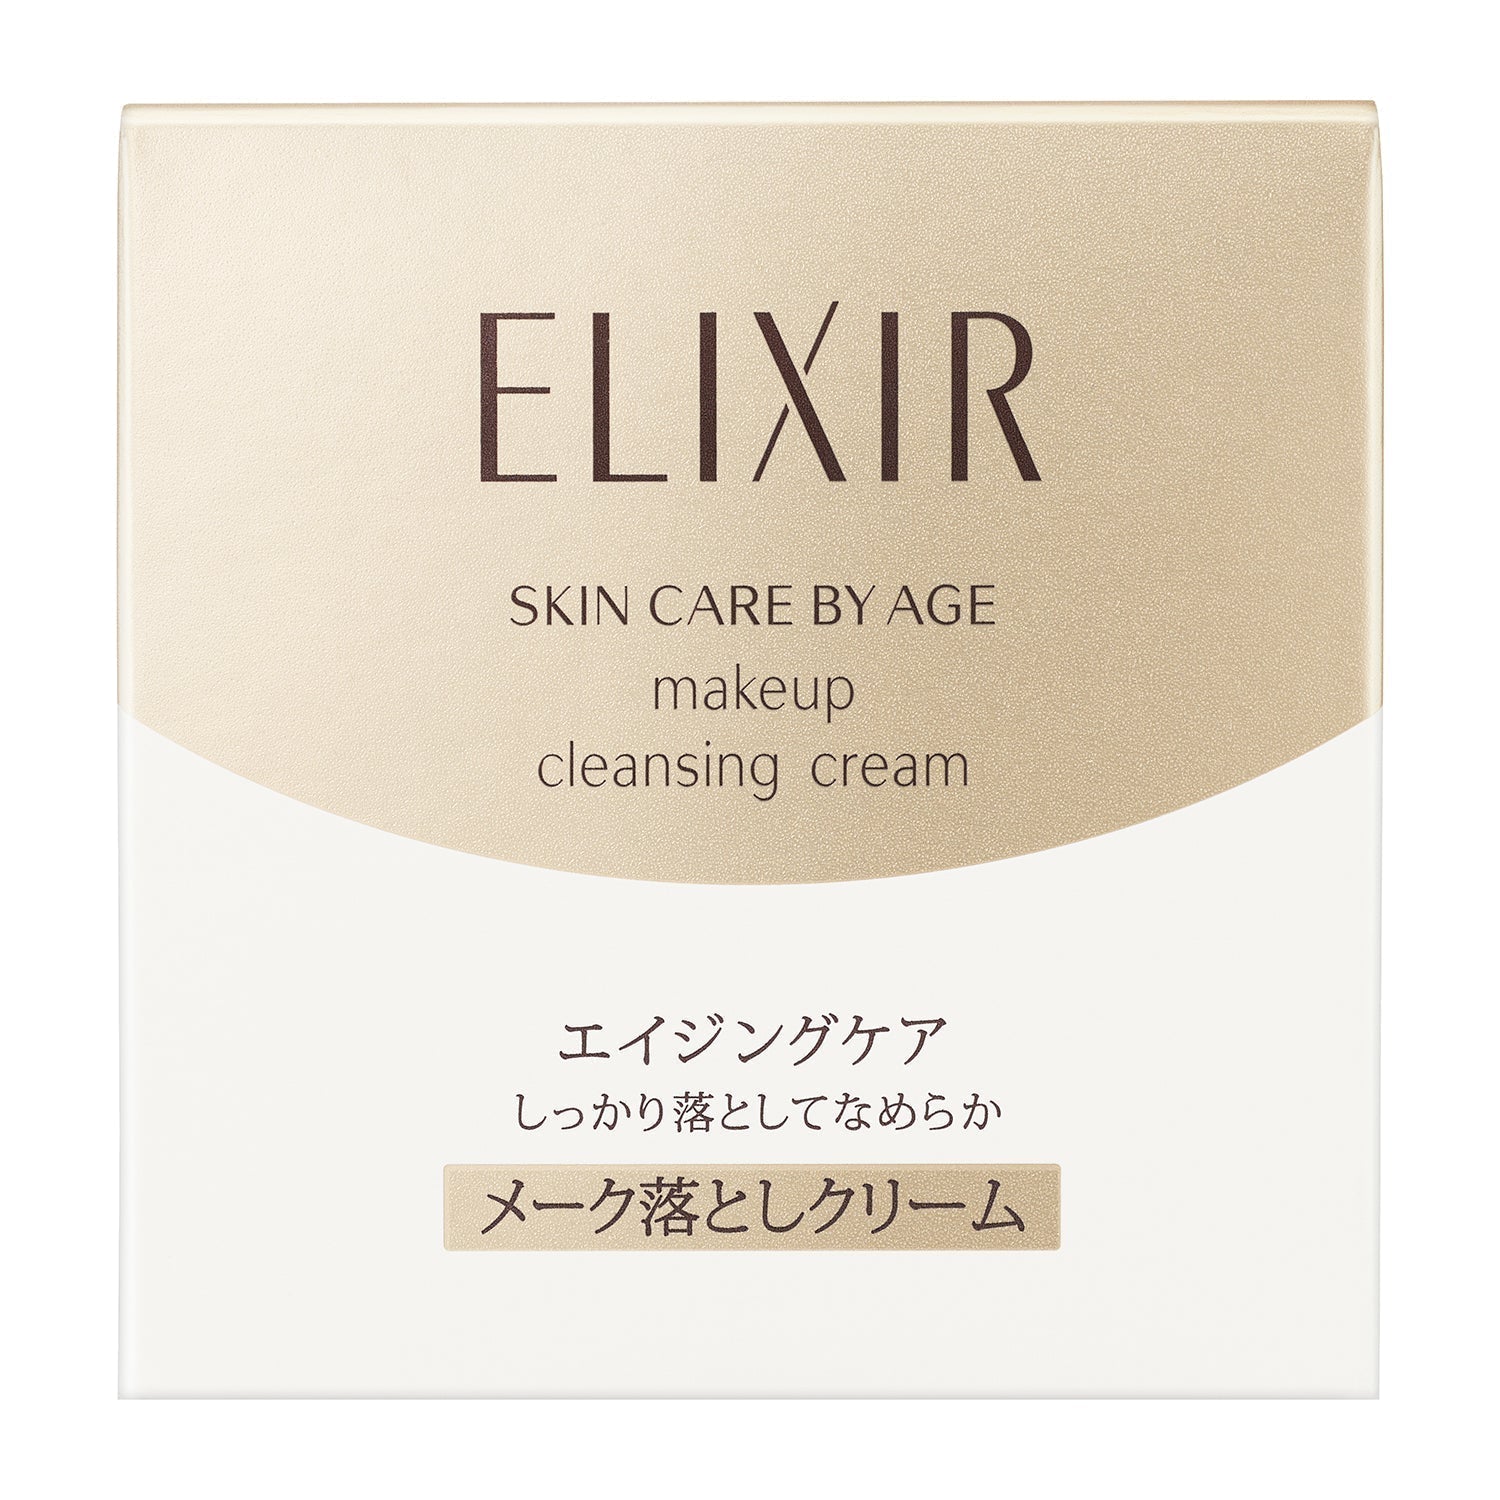 Shiseido Elixir Superieur Makeup Cleansing Cream (Cream Cleanser) 140g